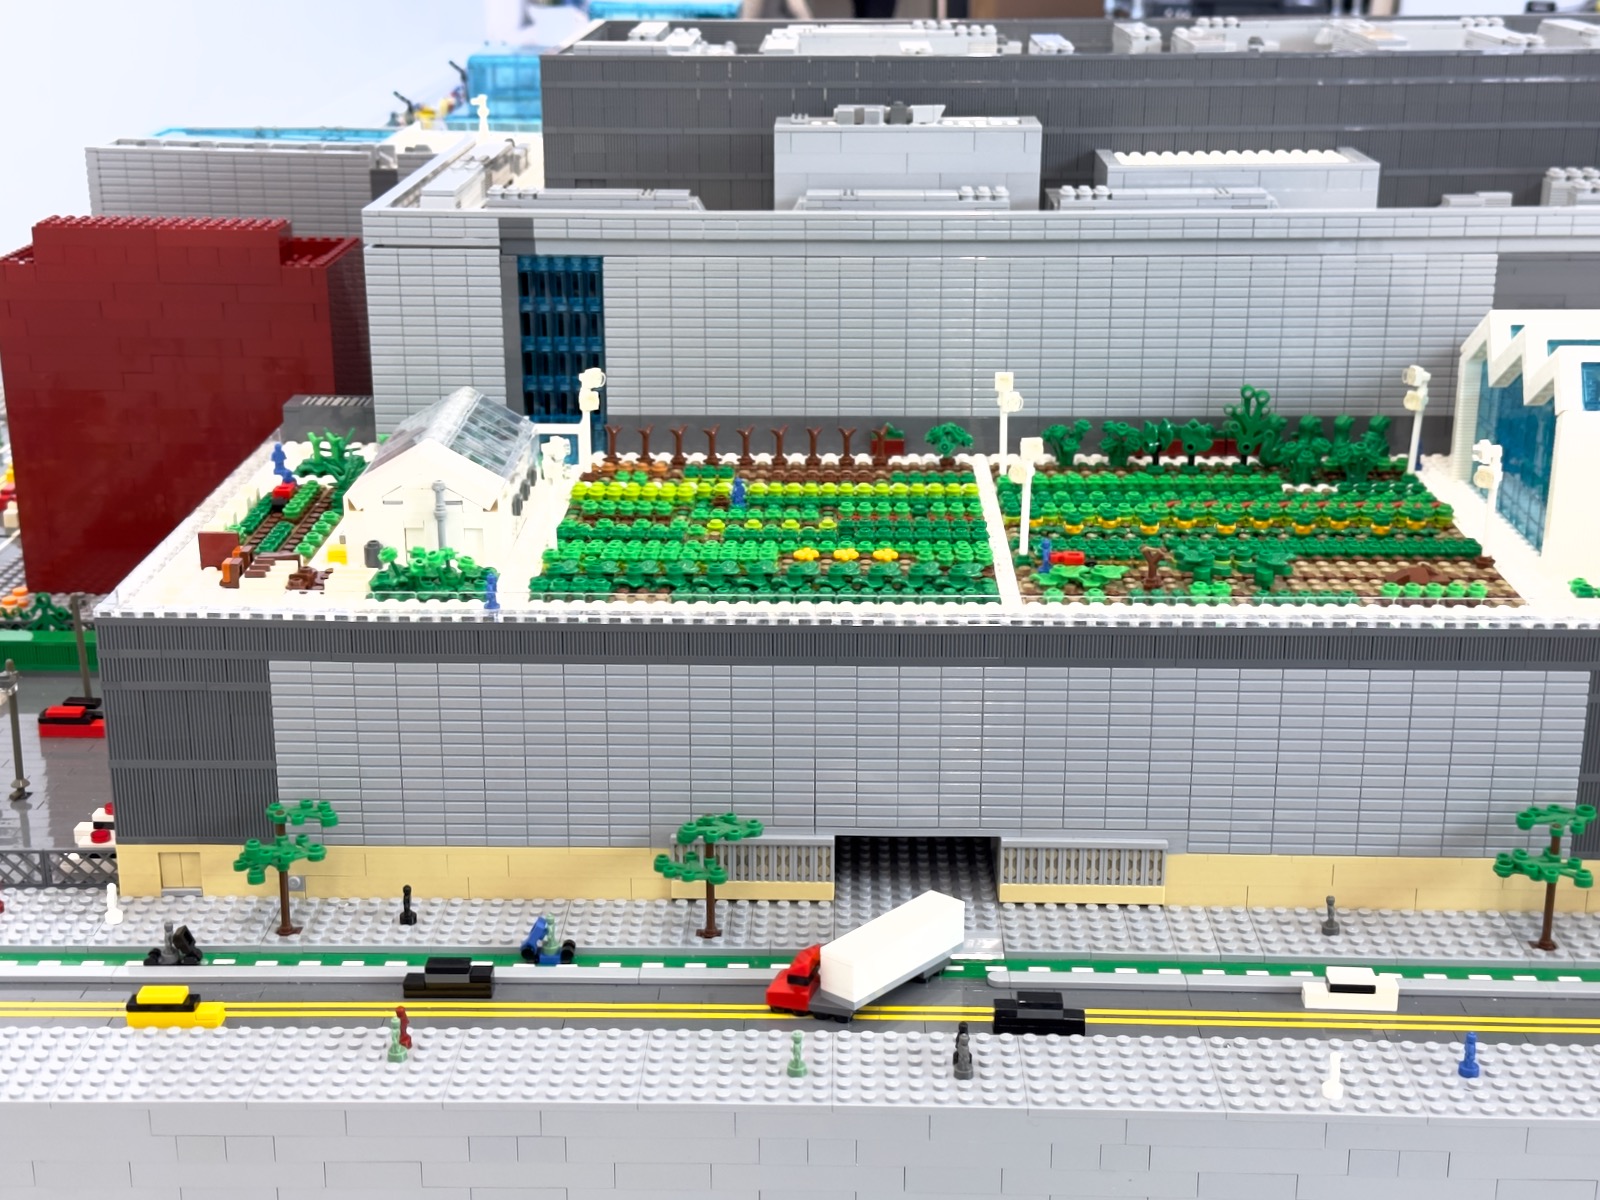 Amazing LEGO creation - Javits Center (annex)